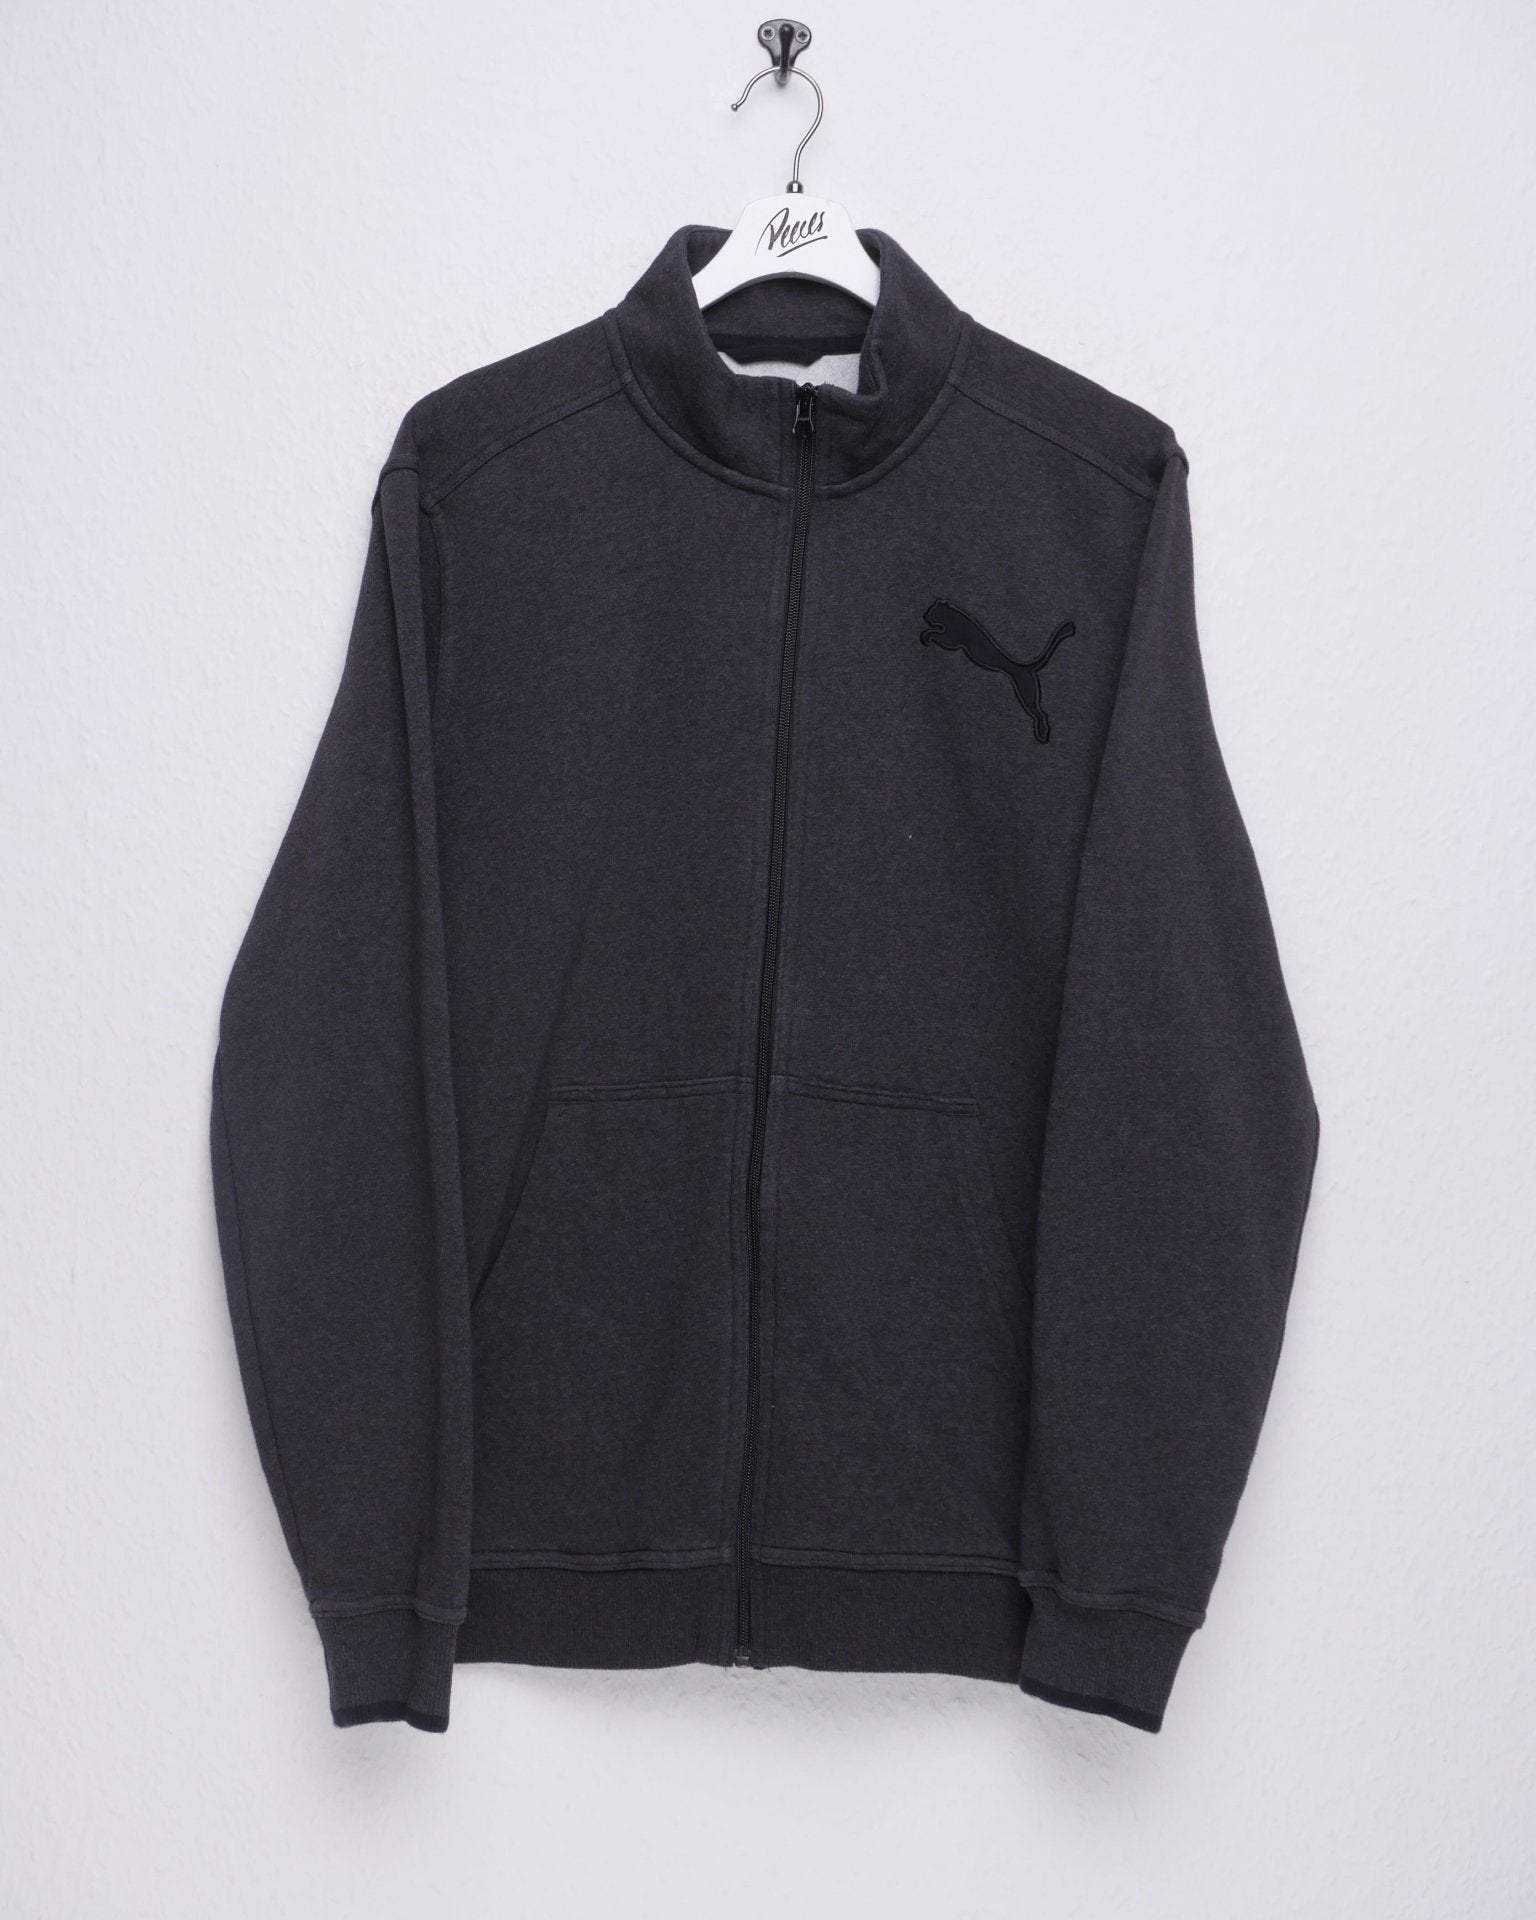 Puma embroidered Big Logo dark grey Zip Sweater - Peeces